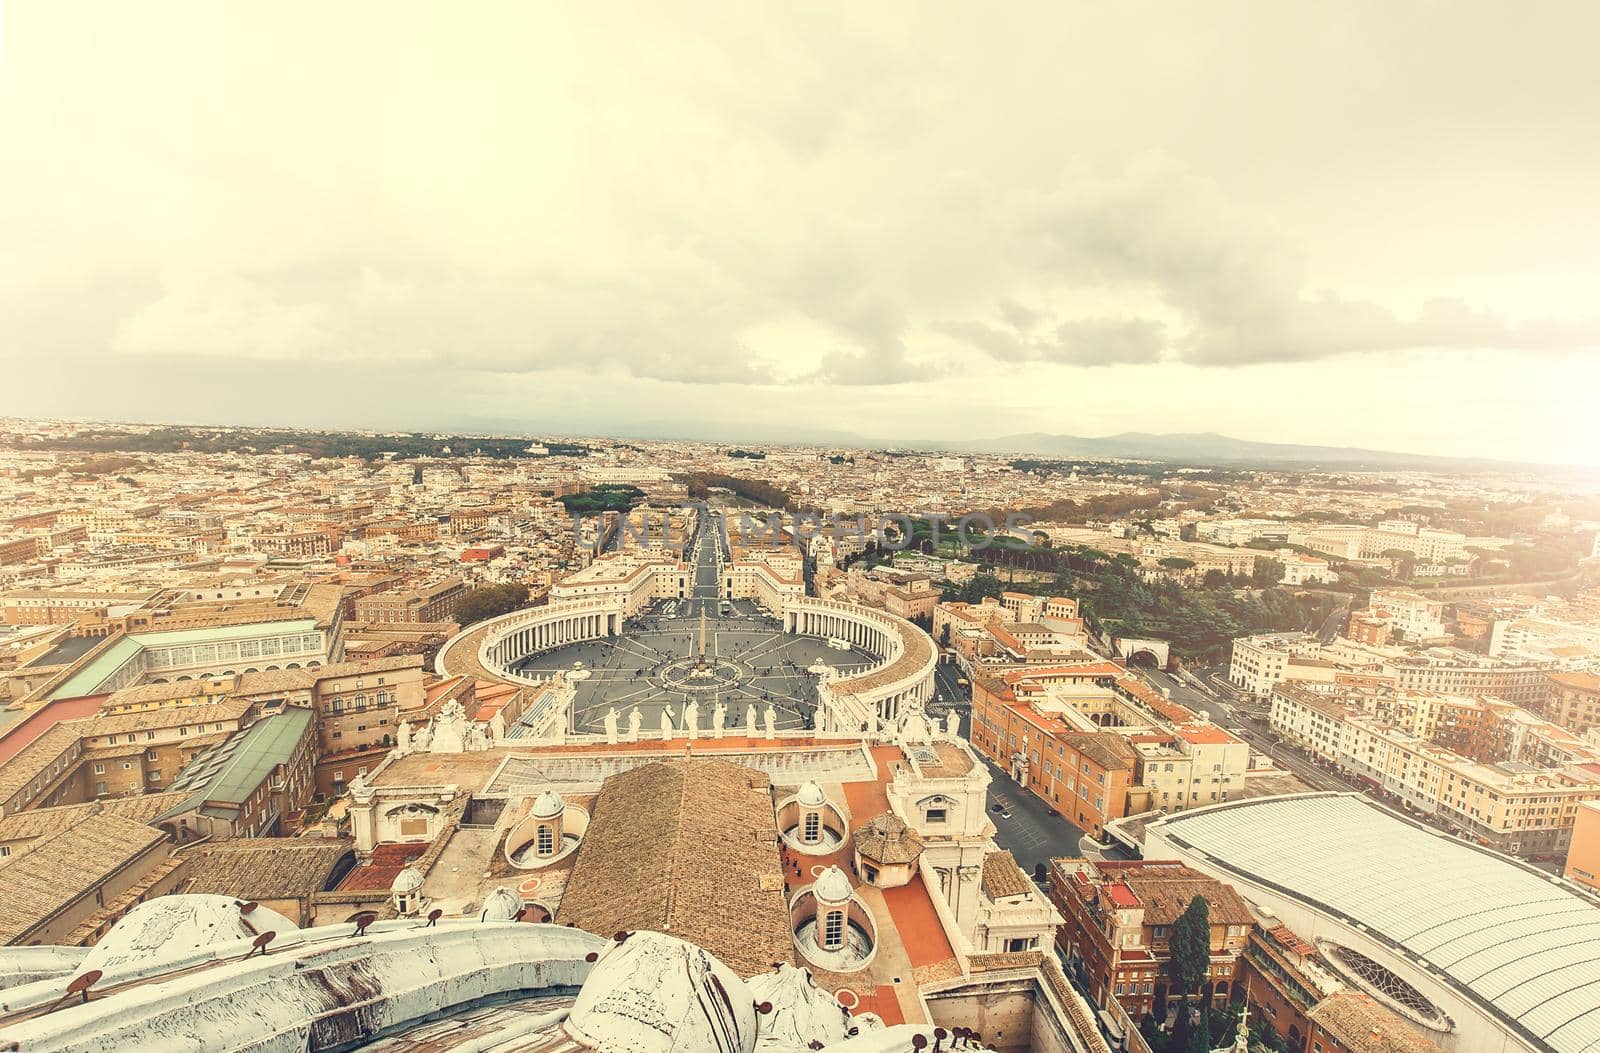 Saint Peter Square and Saint Peter Basilica, Vatican City, Rome, Italy